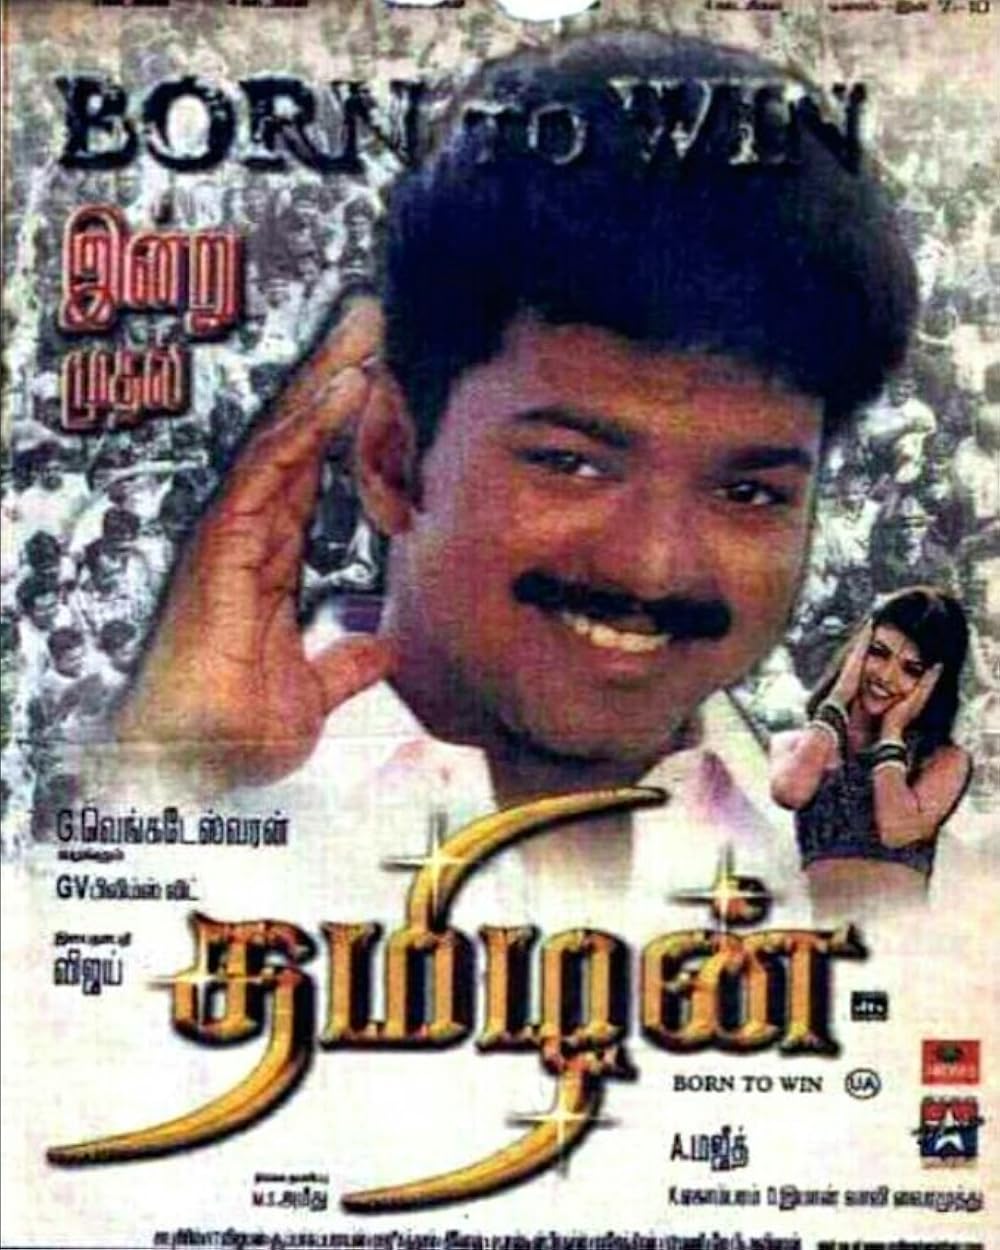 2002 tamil movies list download